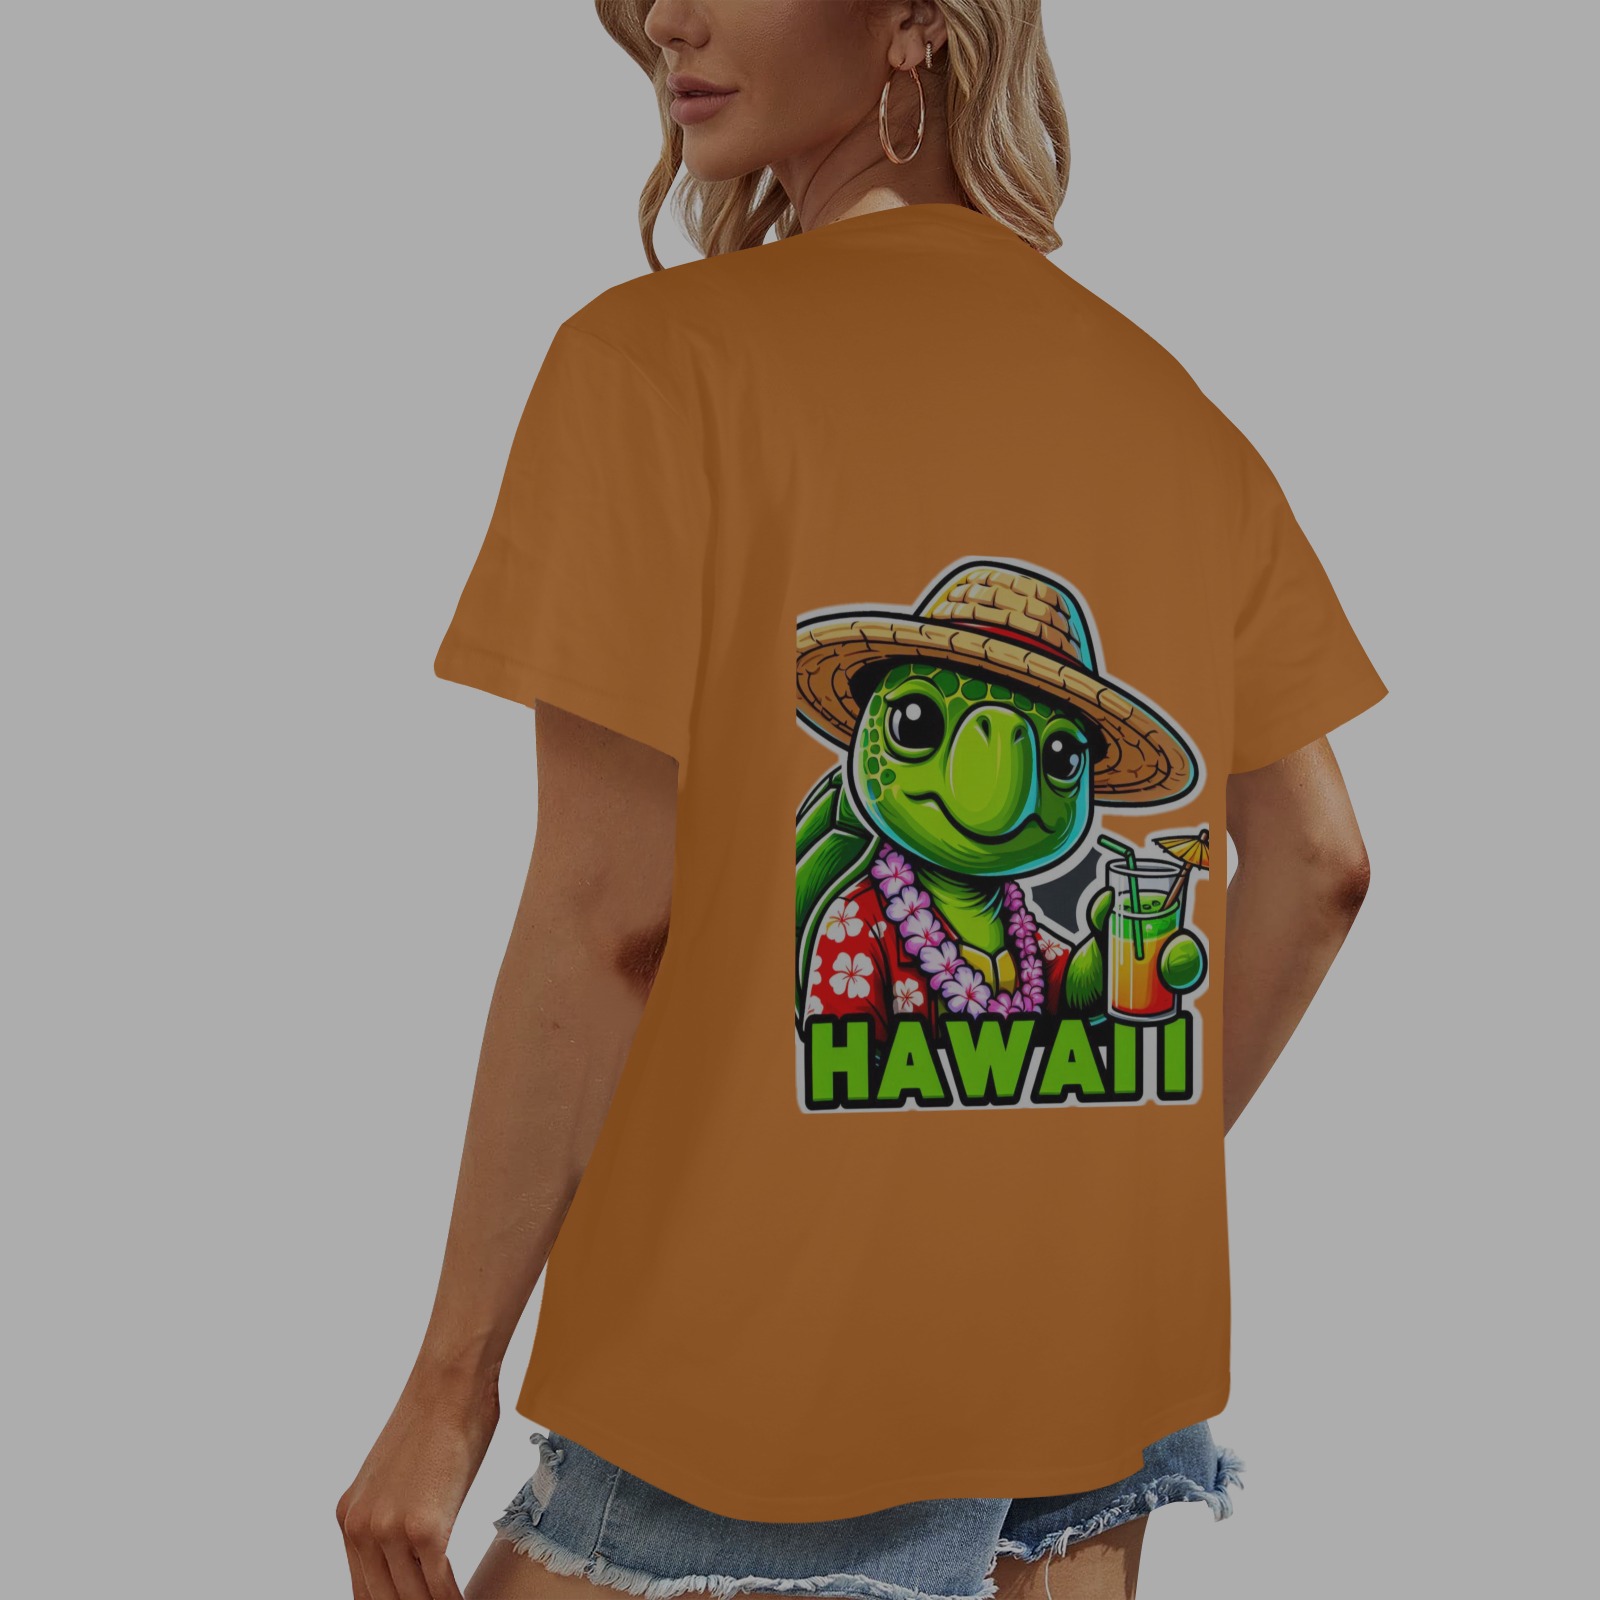 GREEN SEA TURTLE-HAWAII 3 Women's Glow in the Dark T-shirt (Two Sides Printing)